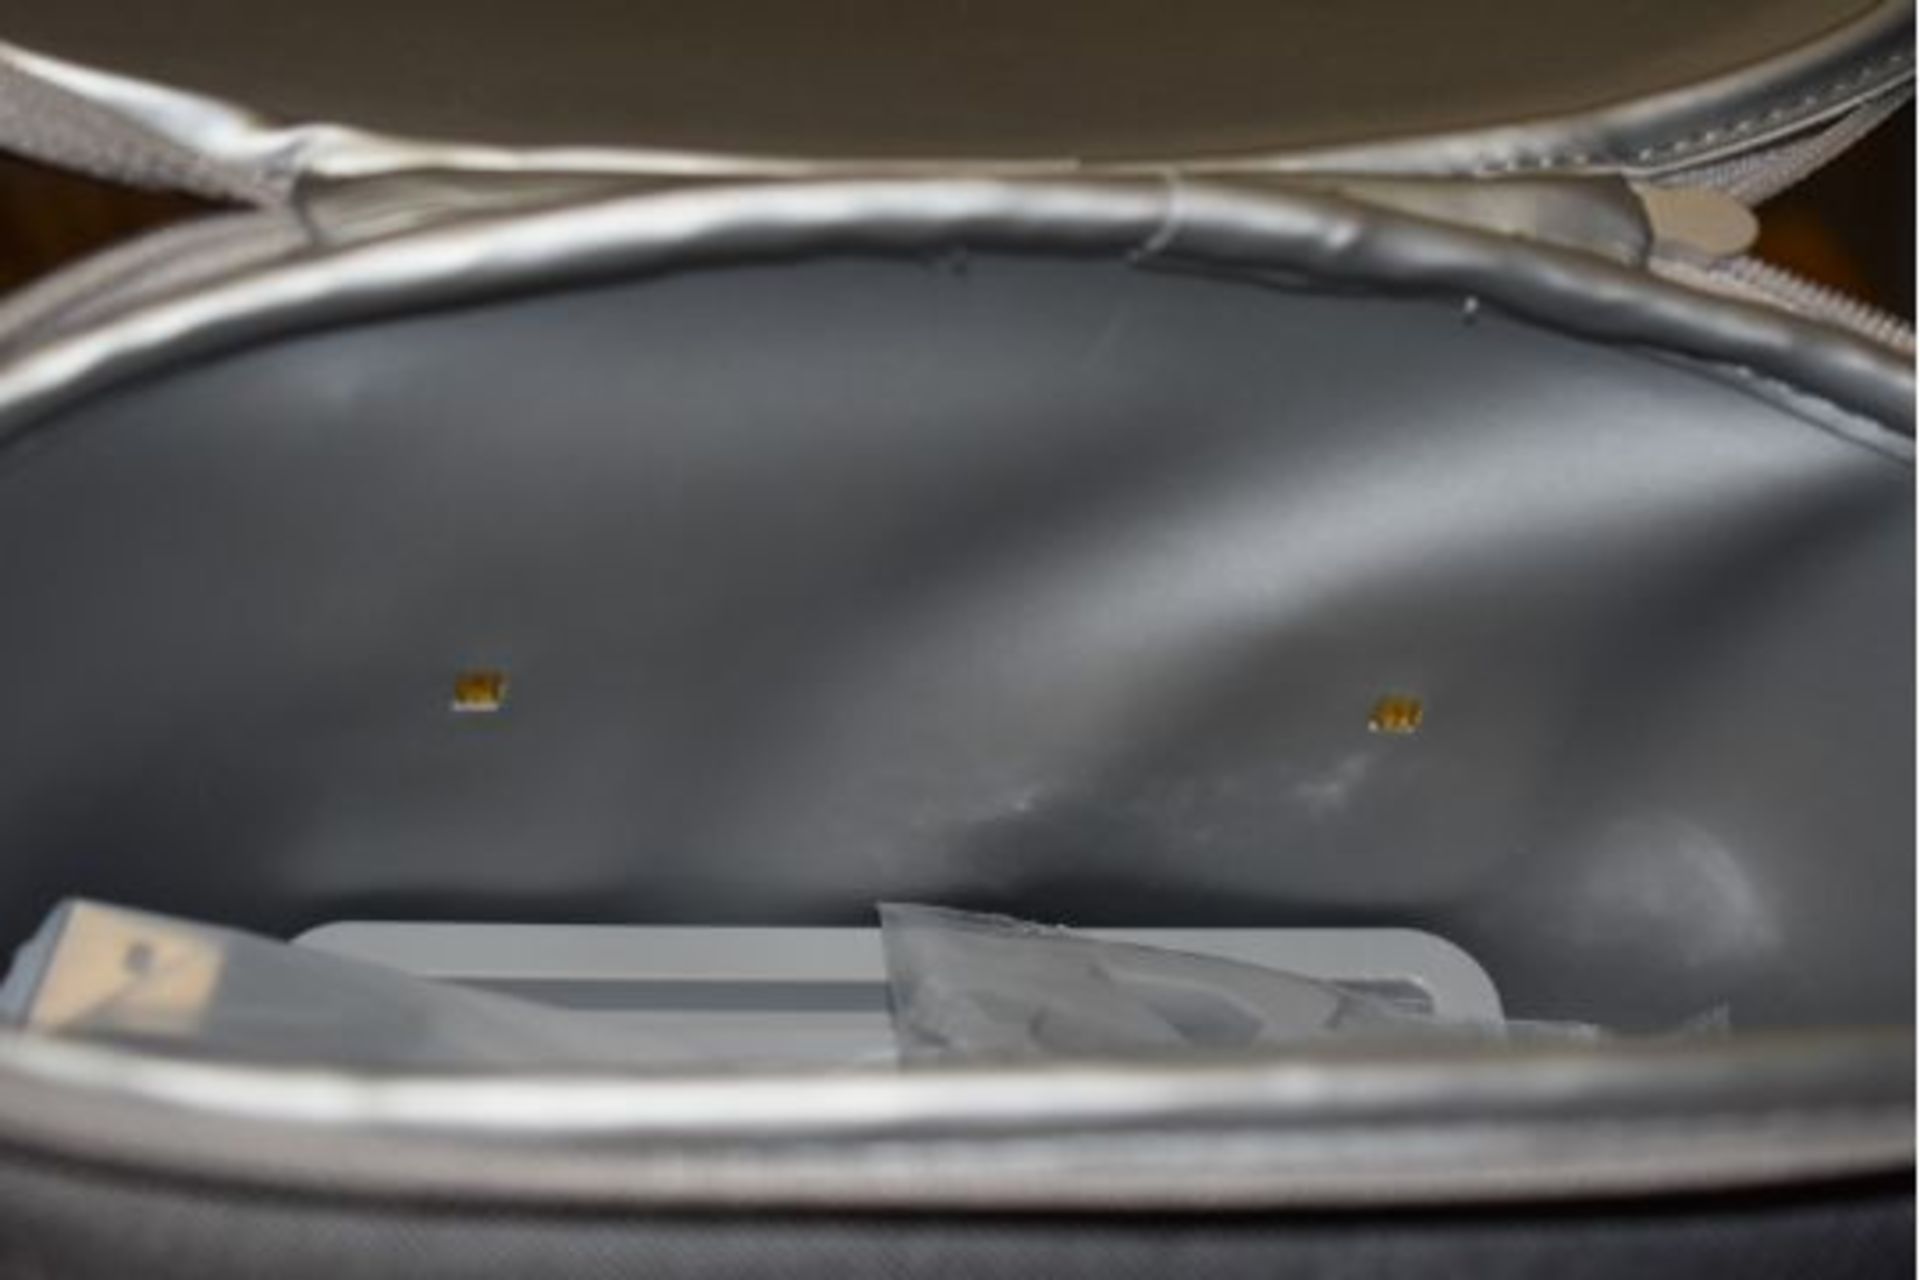 1 x Homedics UV Clean Portable Sanitiser Bag - Kills Upto 99.9% of Bacteria & Viruses in Just 60 - Image 15 of 24